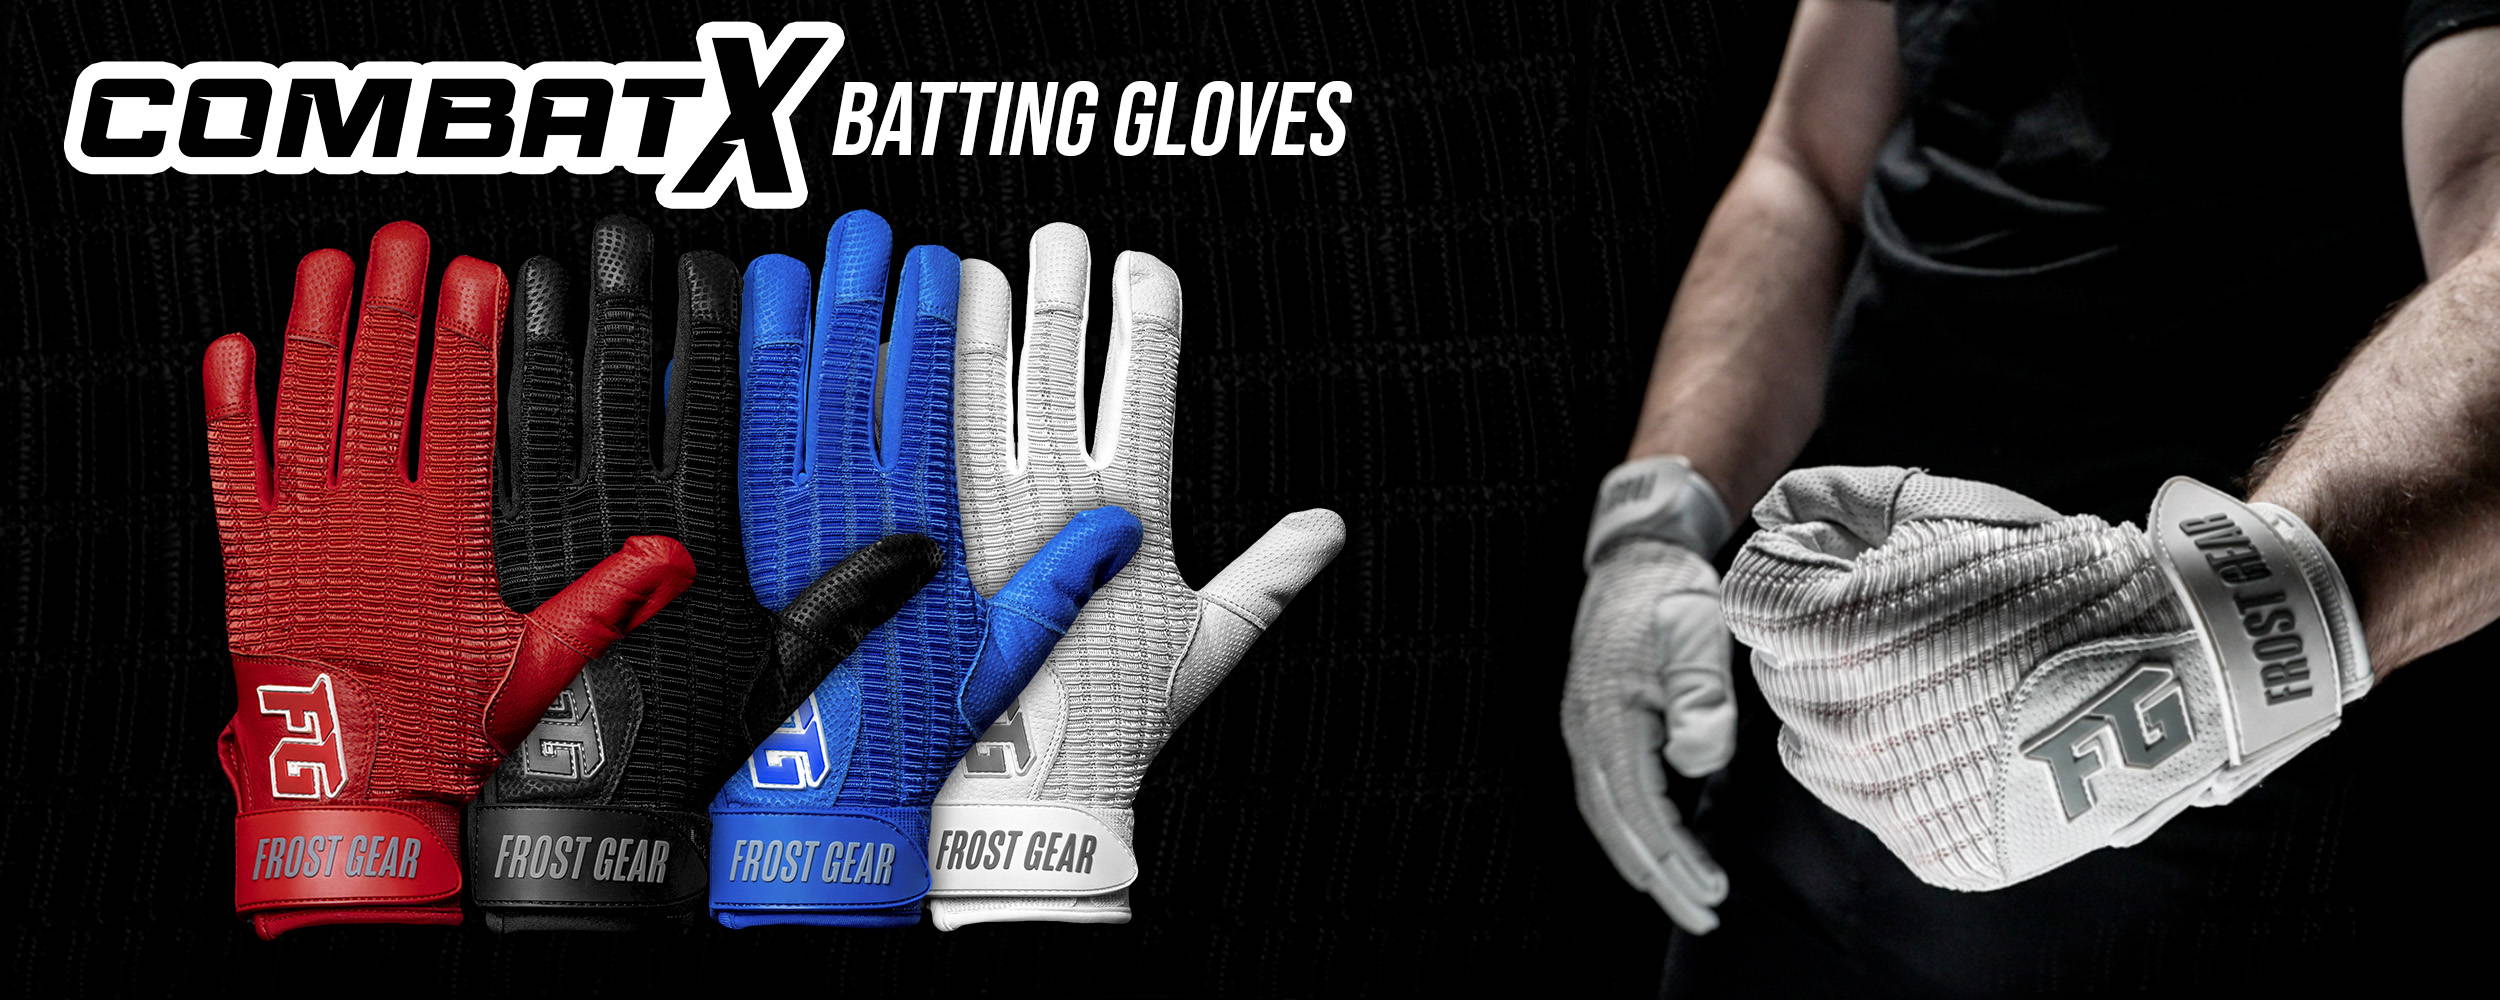 combatx batting gloves